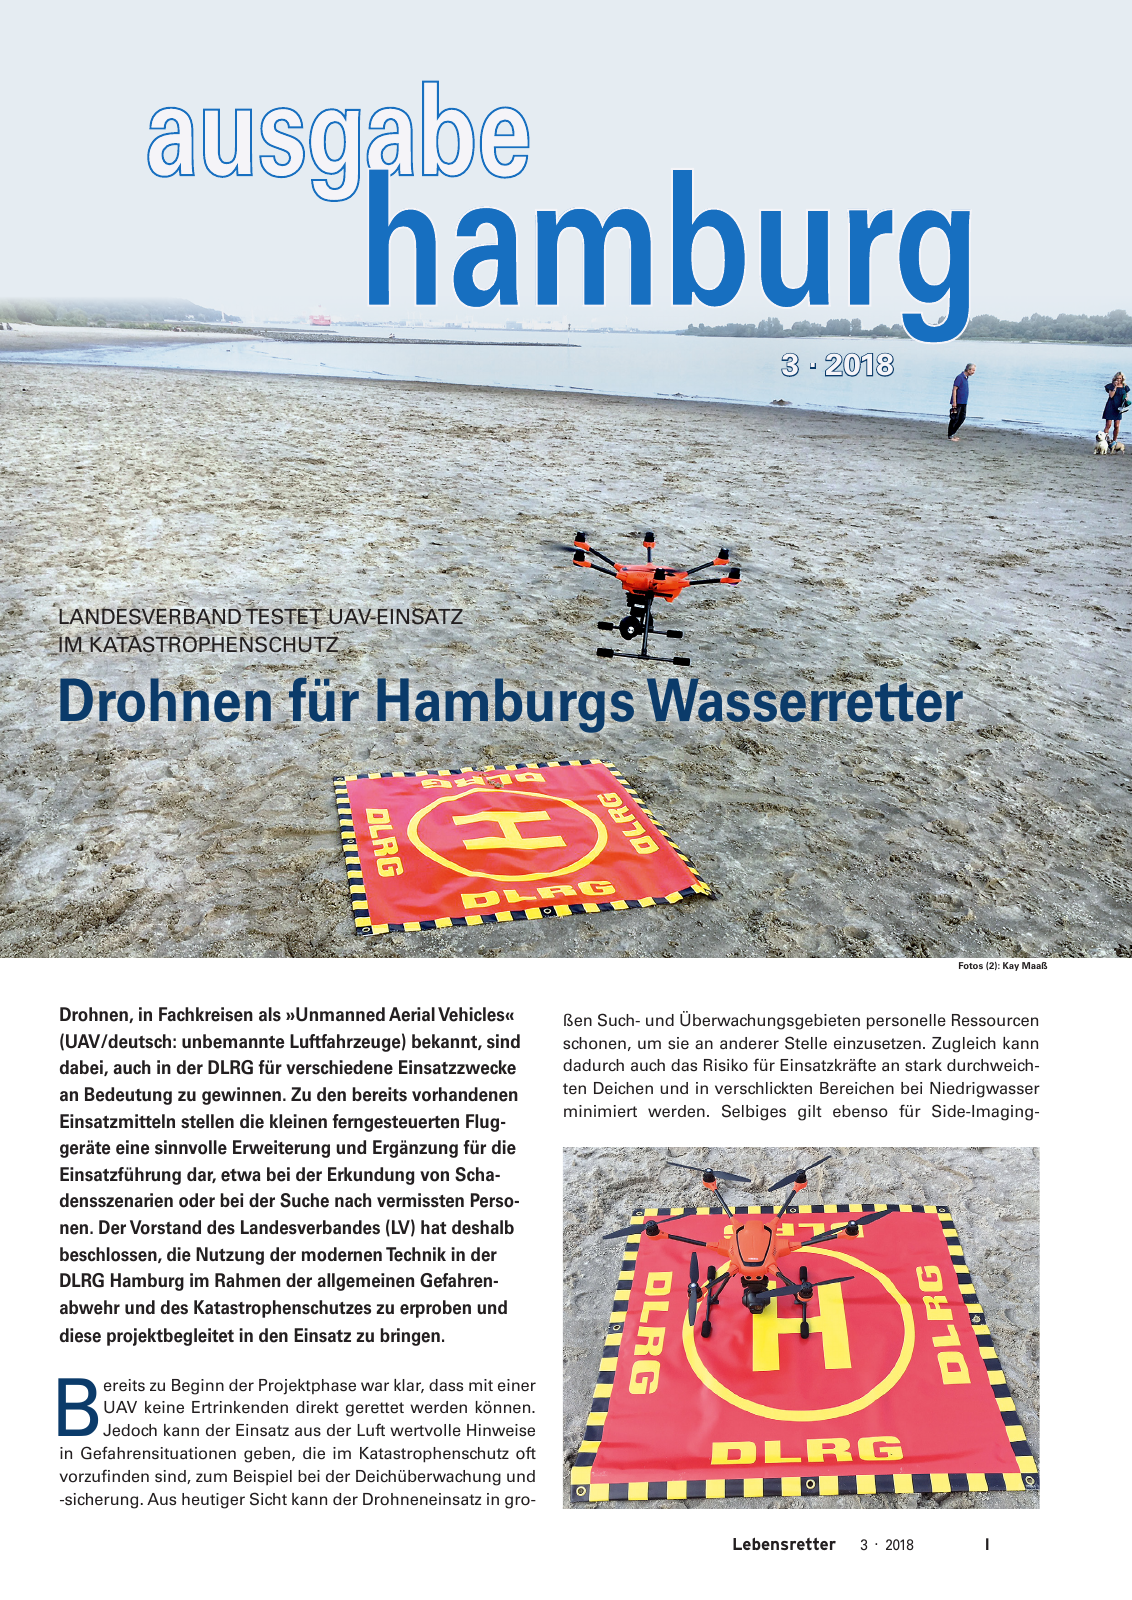 Vorschau Lebensretter 3/2018 - Regionalausgabe Hamburg Seite 3